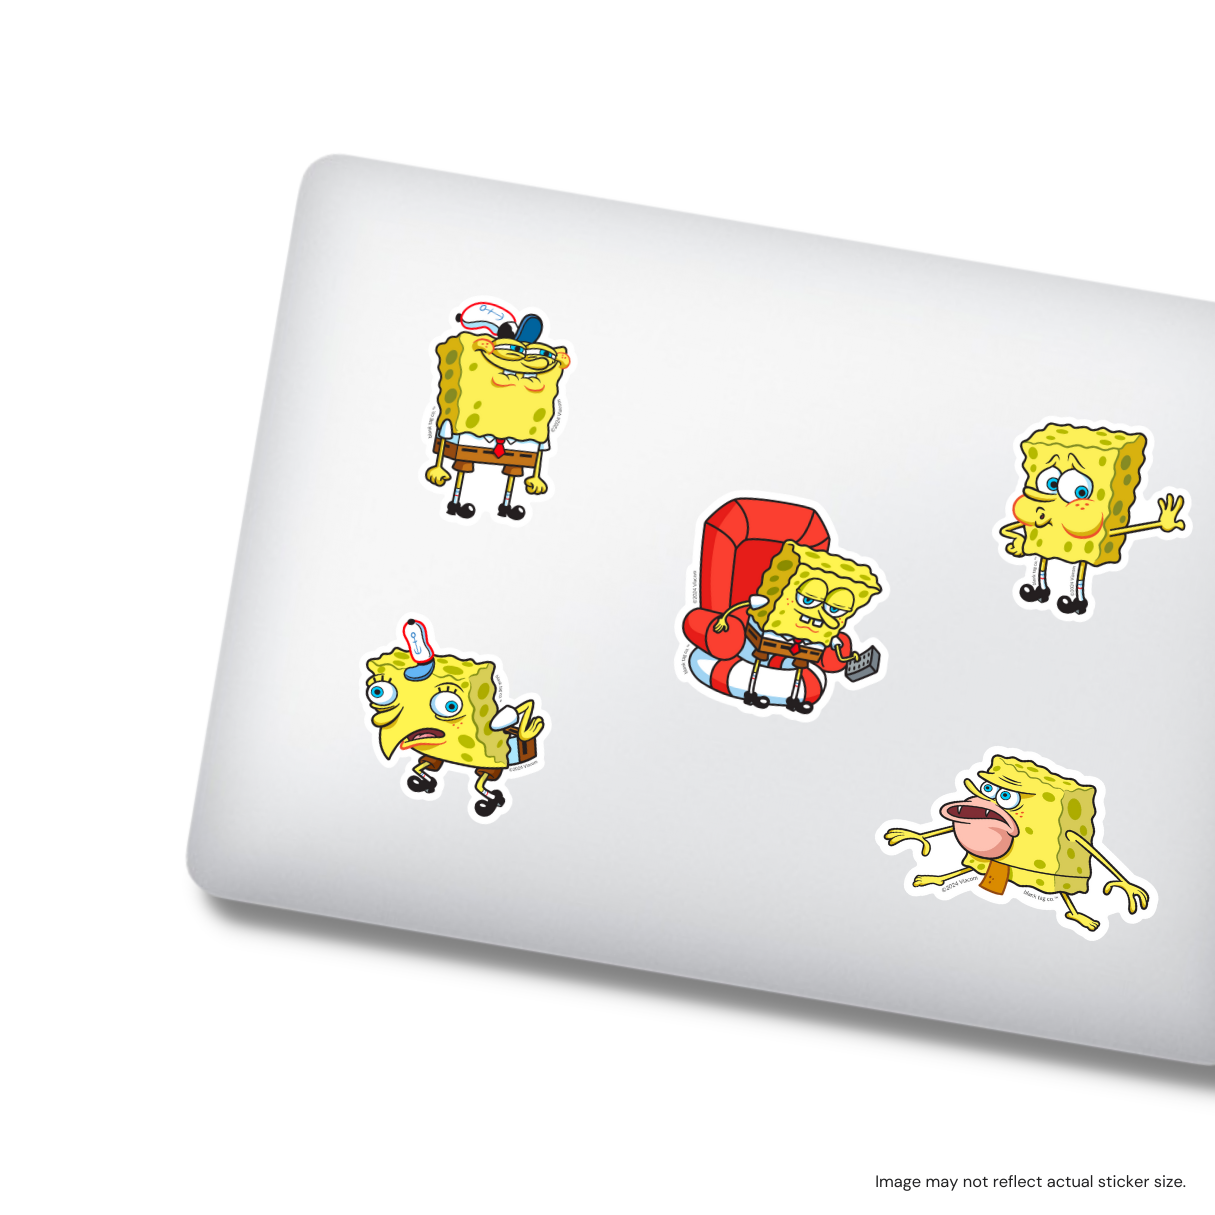 The Caveman SpongeBob Meme Sticker